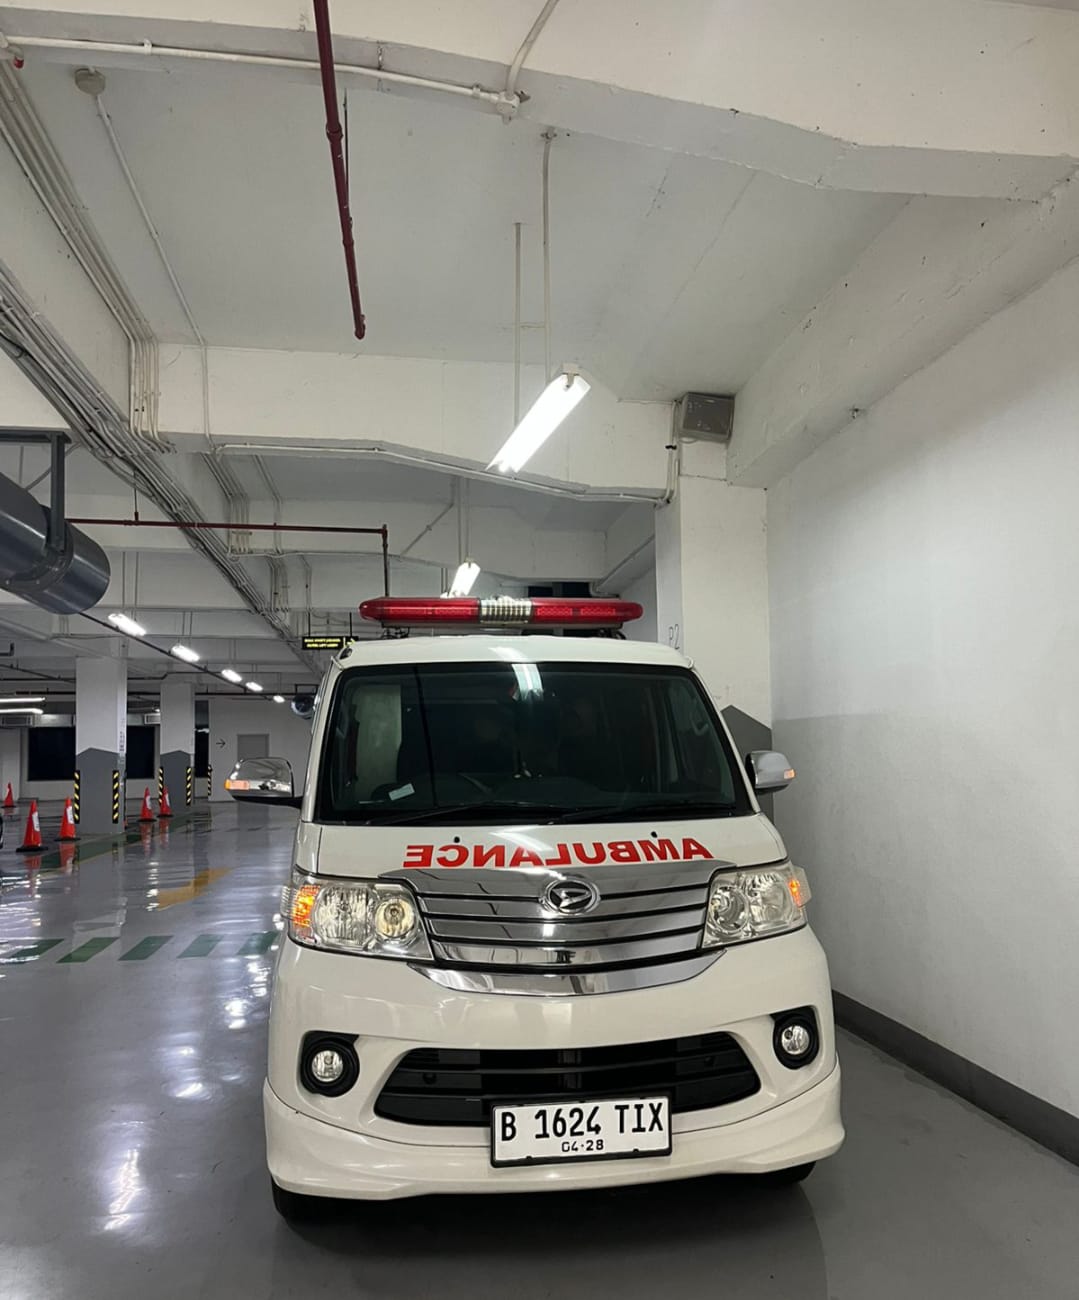 Rental Ambulans di Jakarta Barat Panggilan 24 jam Fast Respons, Hubungi WA 085211551088 